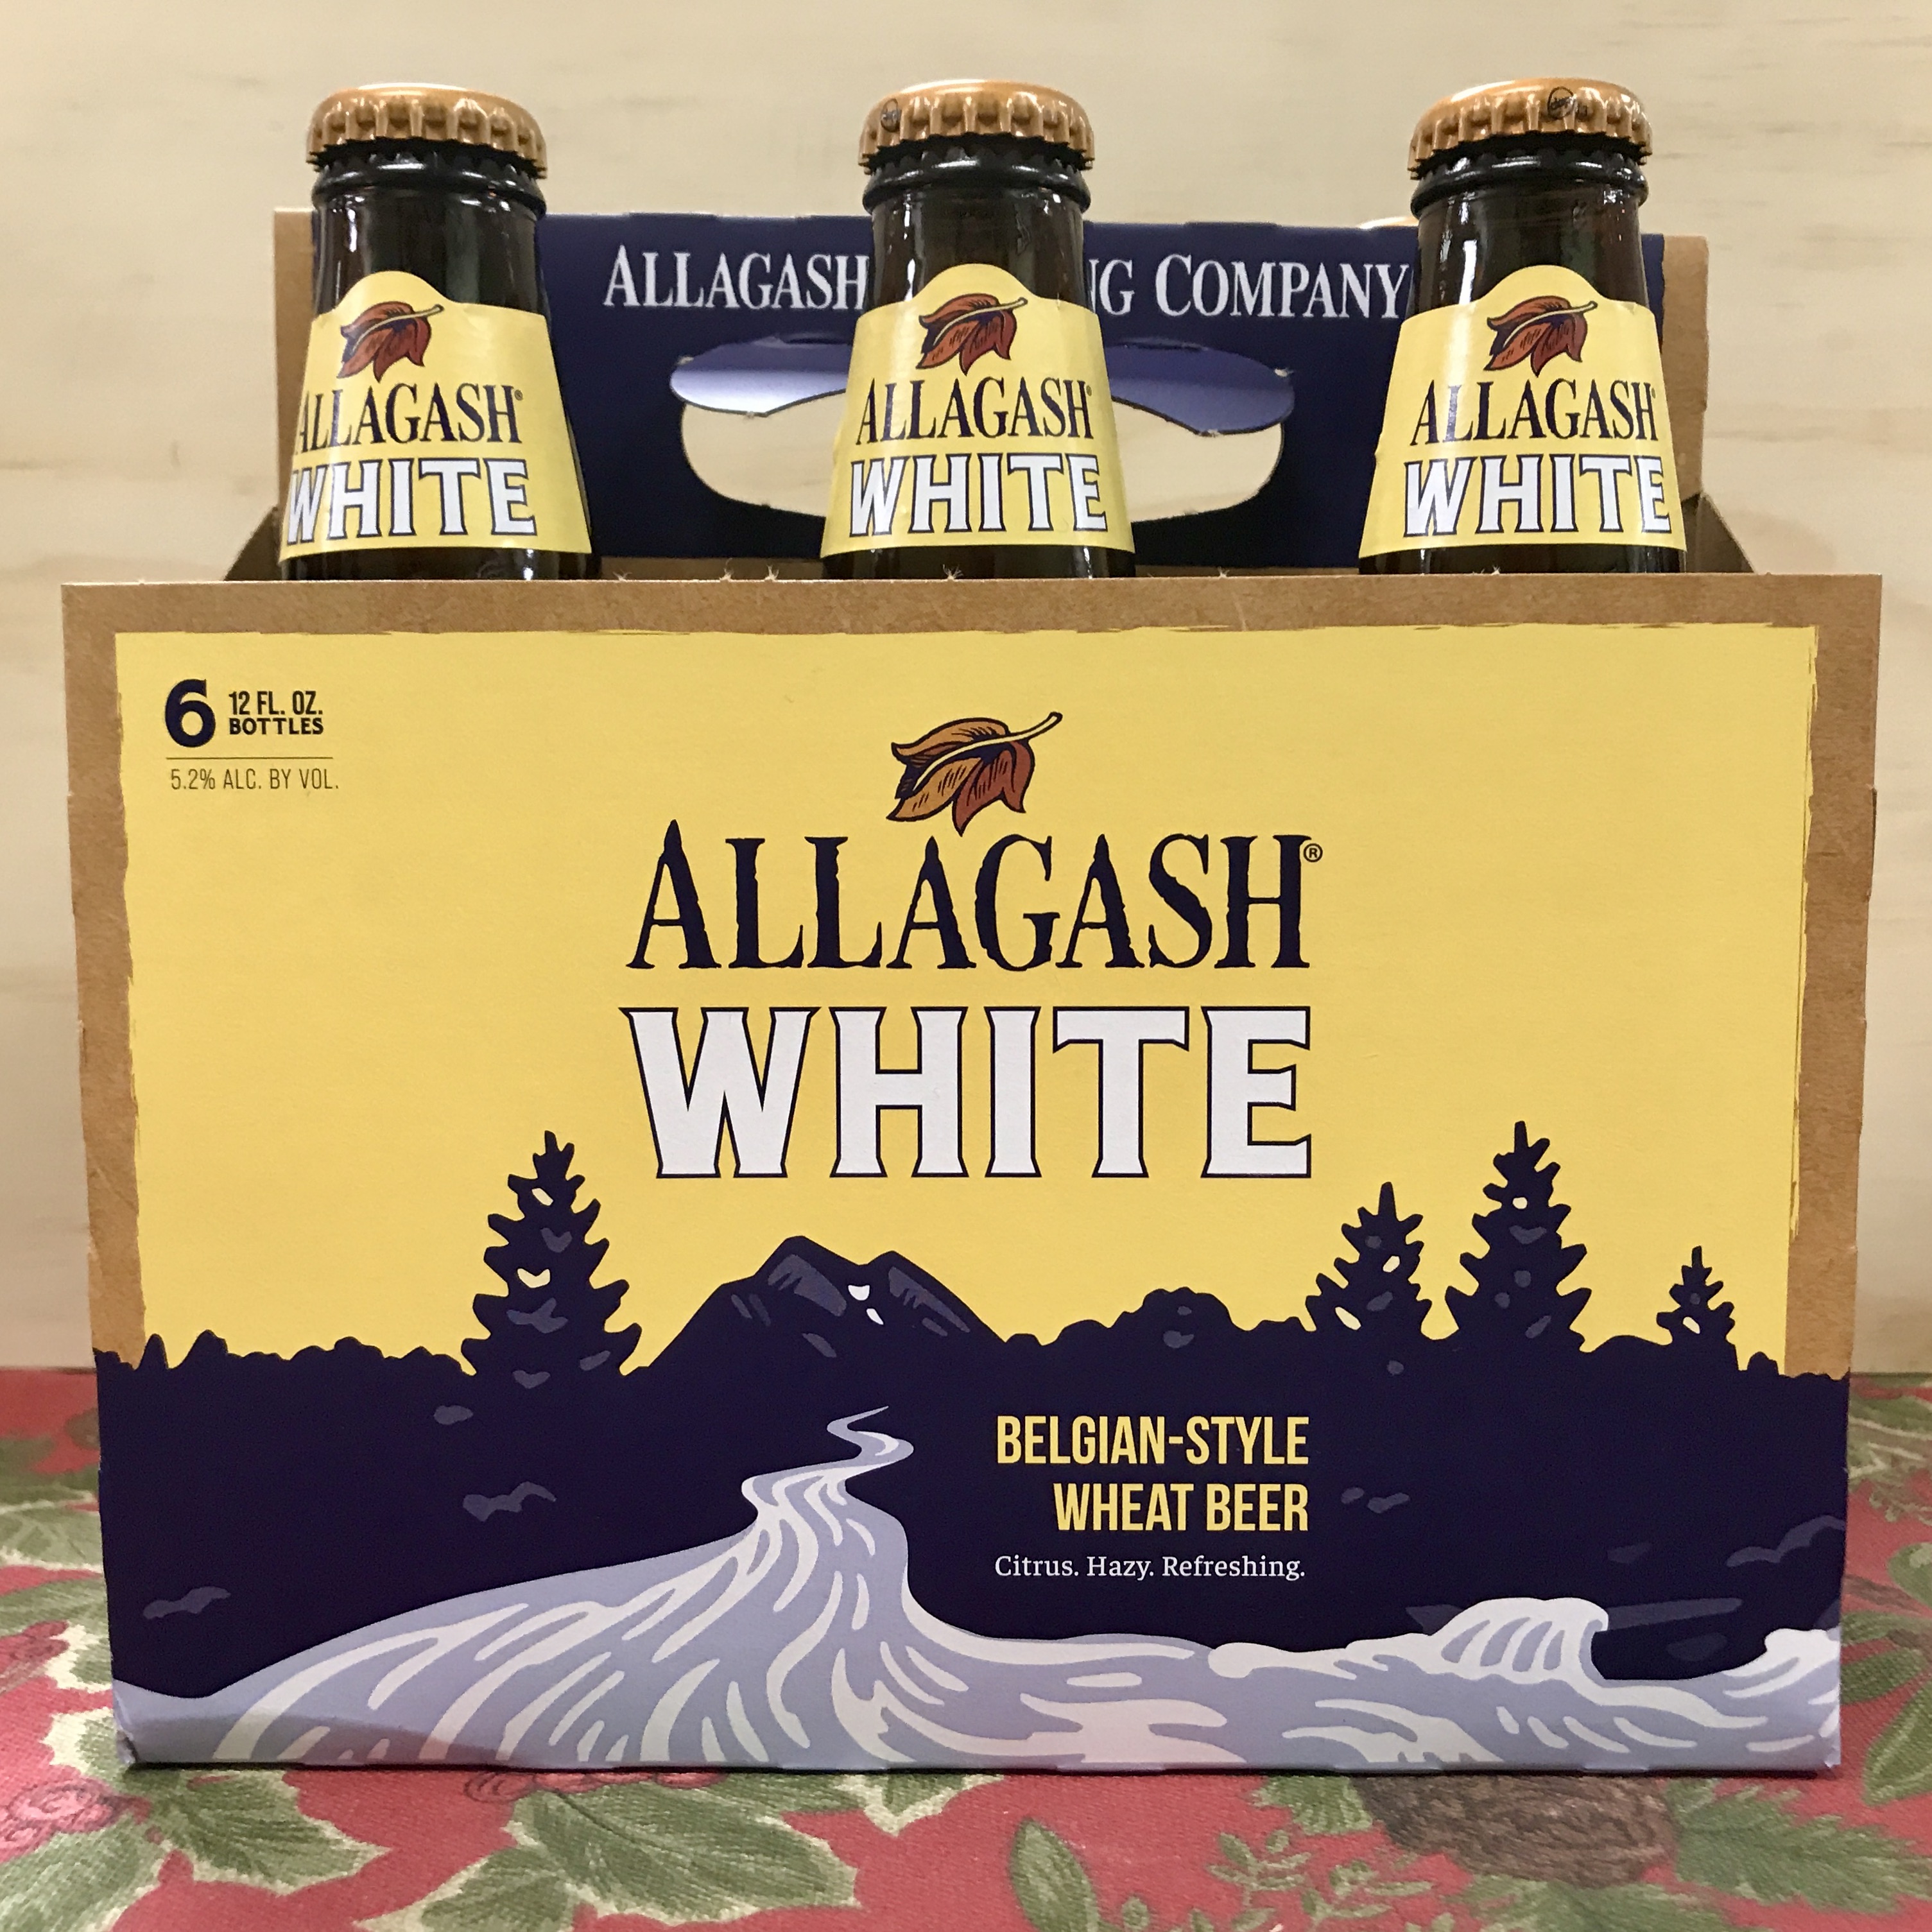 Allagash White Belgian-style Wheat Beer 6pk/12oz bottles